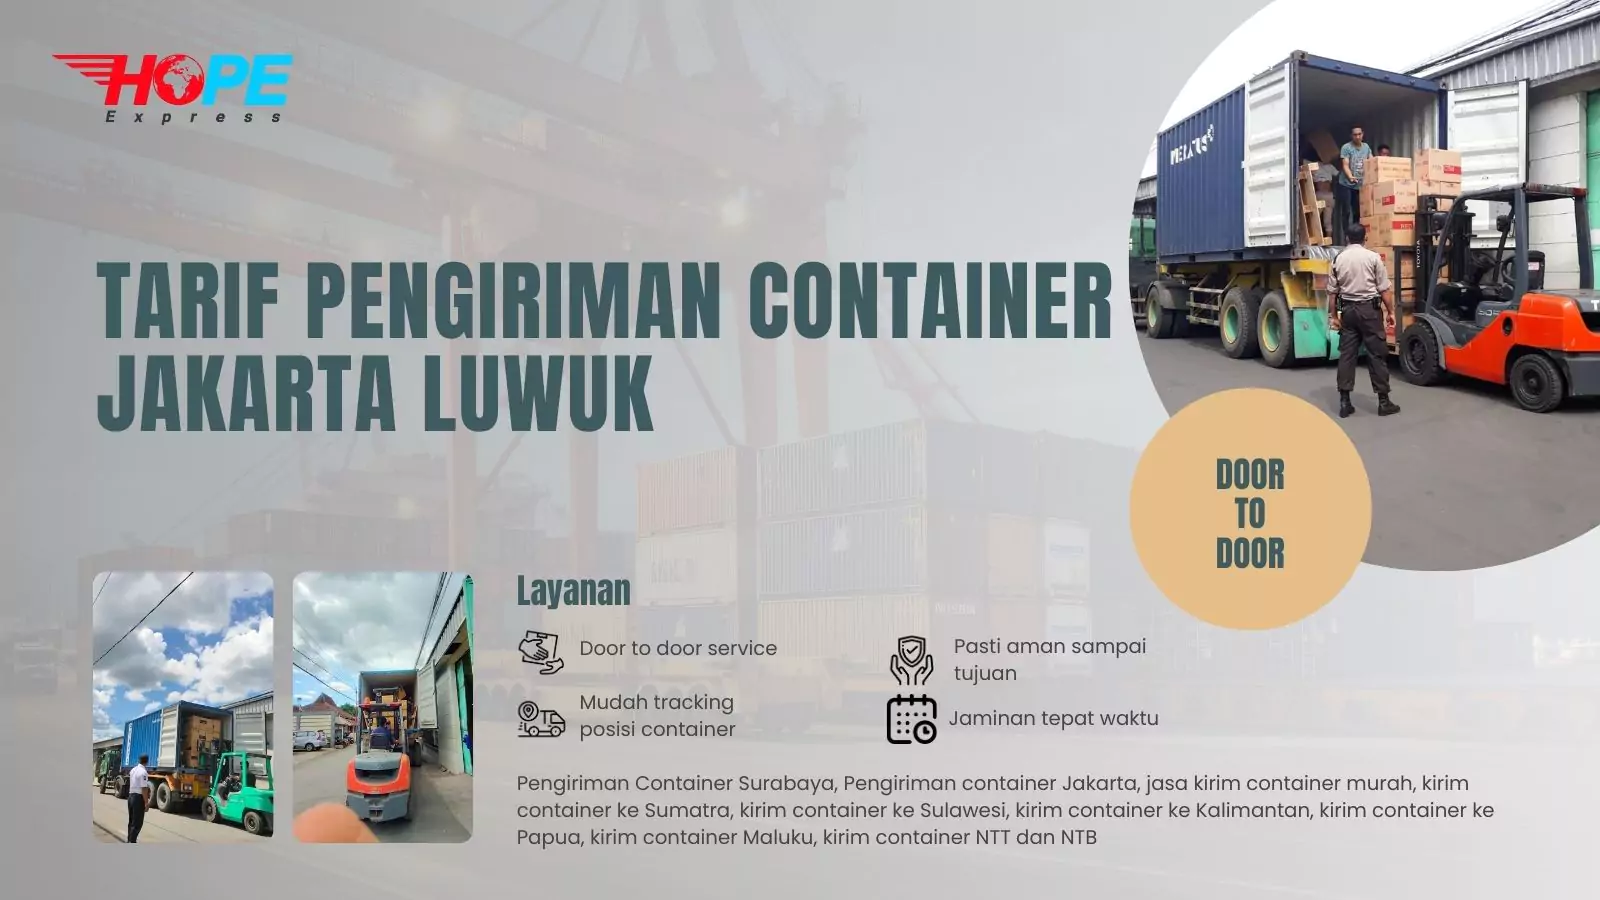 Tarif Pengiriman Container Jakarta Luwuk